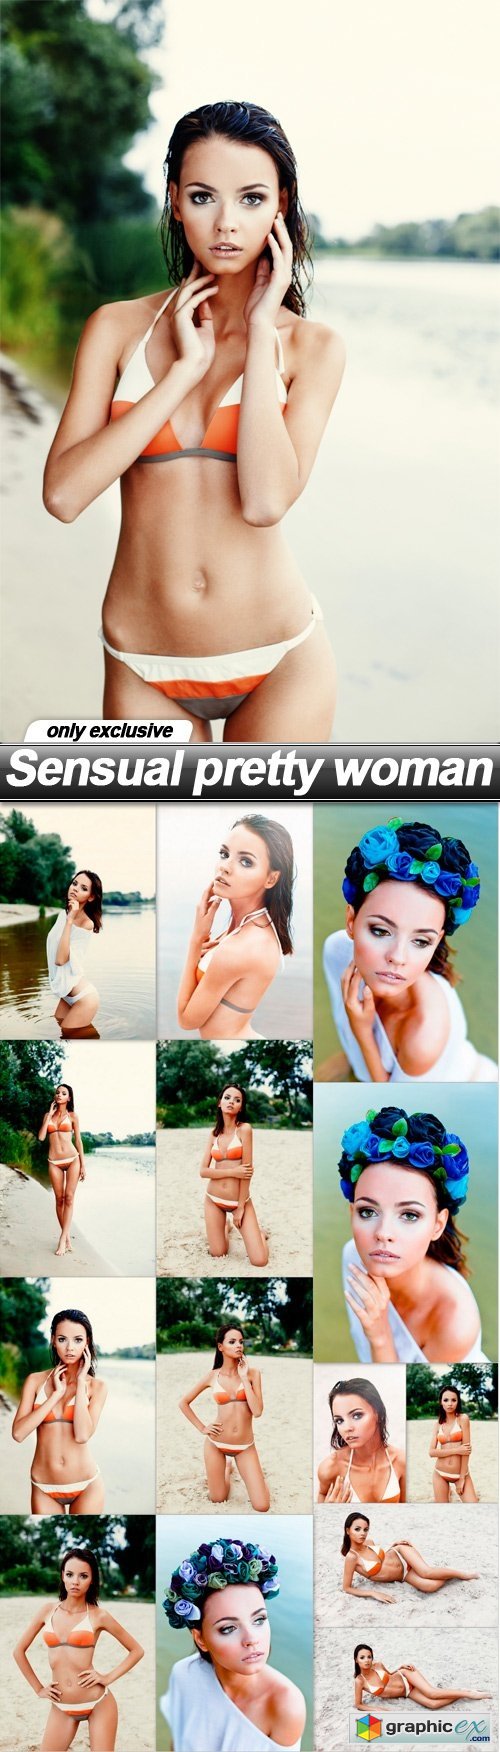 Sensual pretty woman - 14 UHQ JPEG